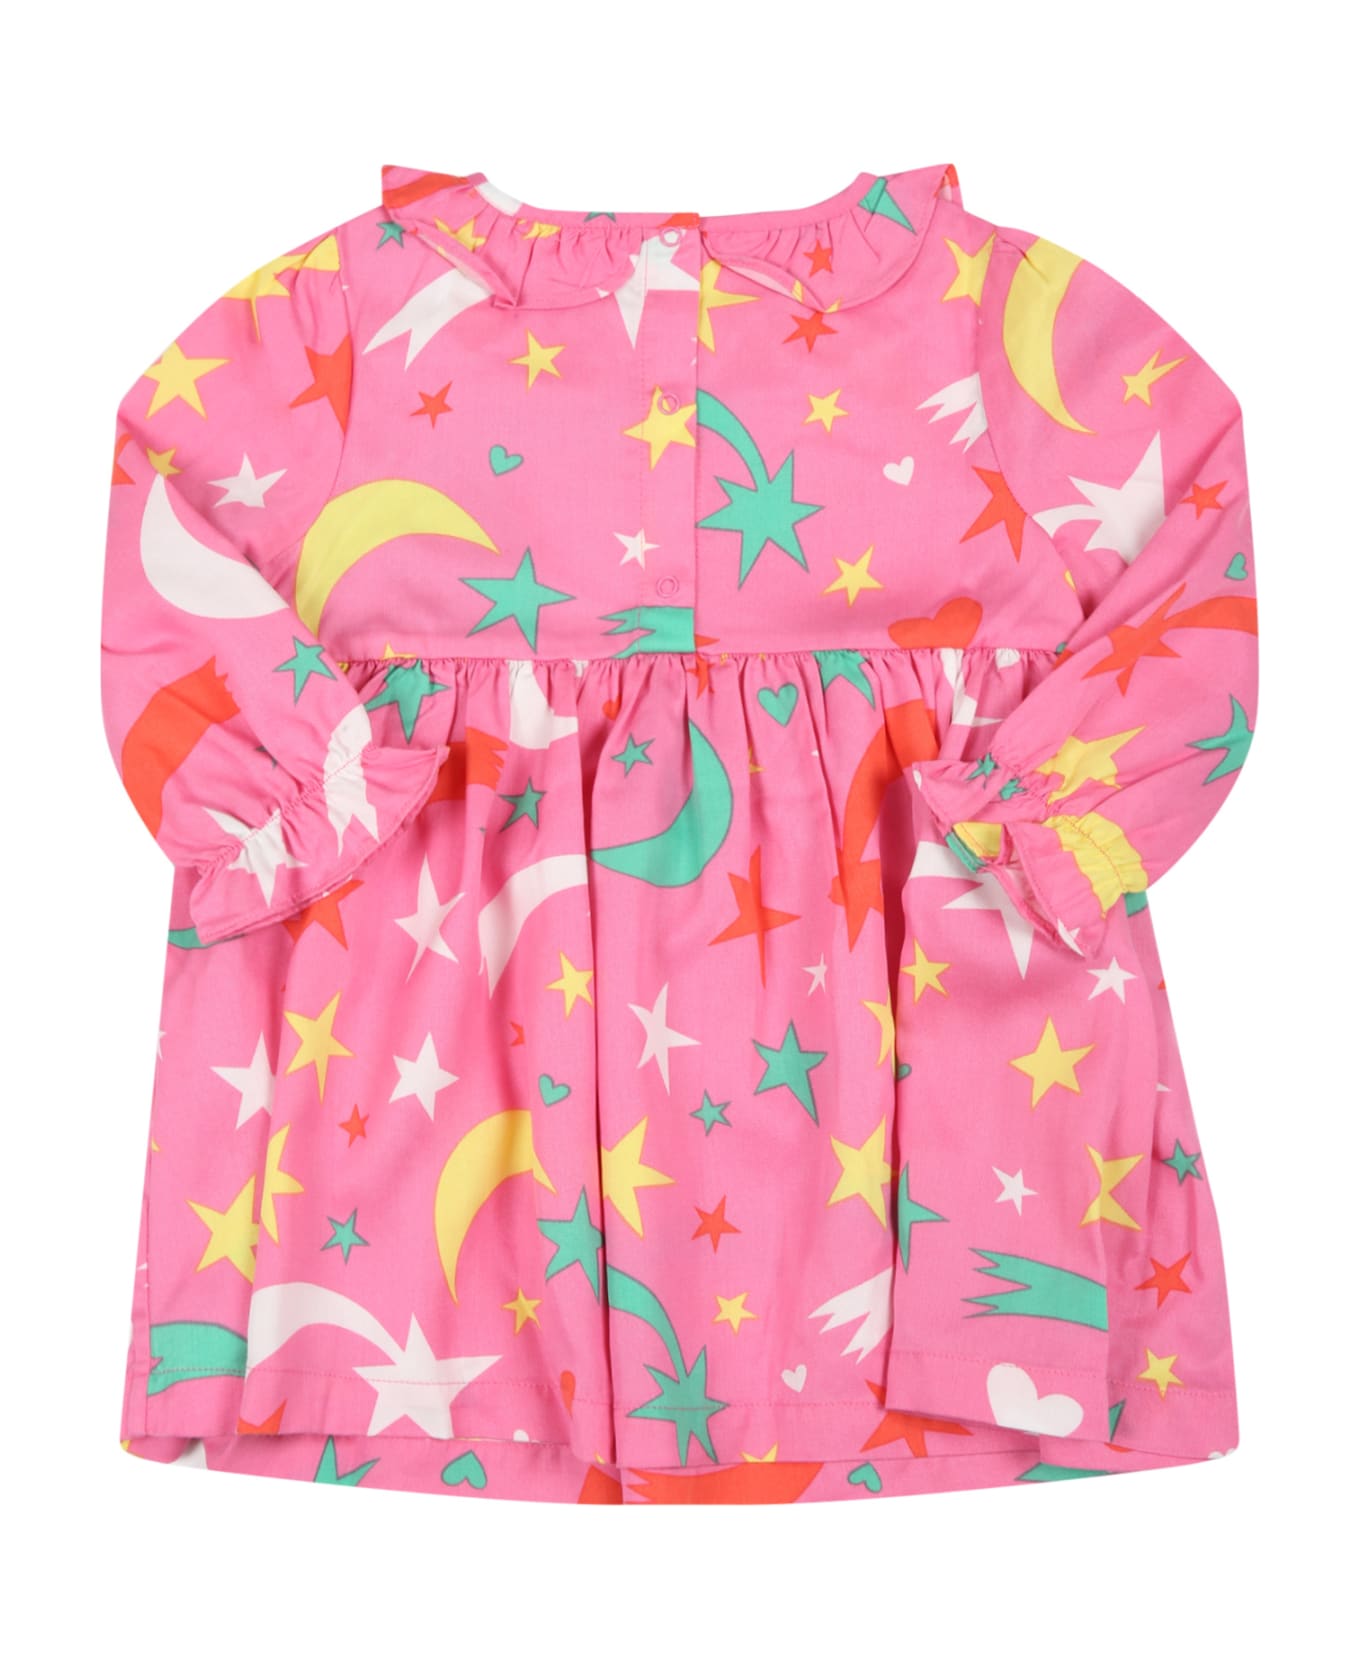 Stella McCartney Kids Fuchsia Dress Gor Baby Girl With Colorful Stars - Fuchsia